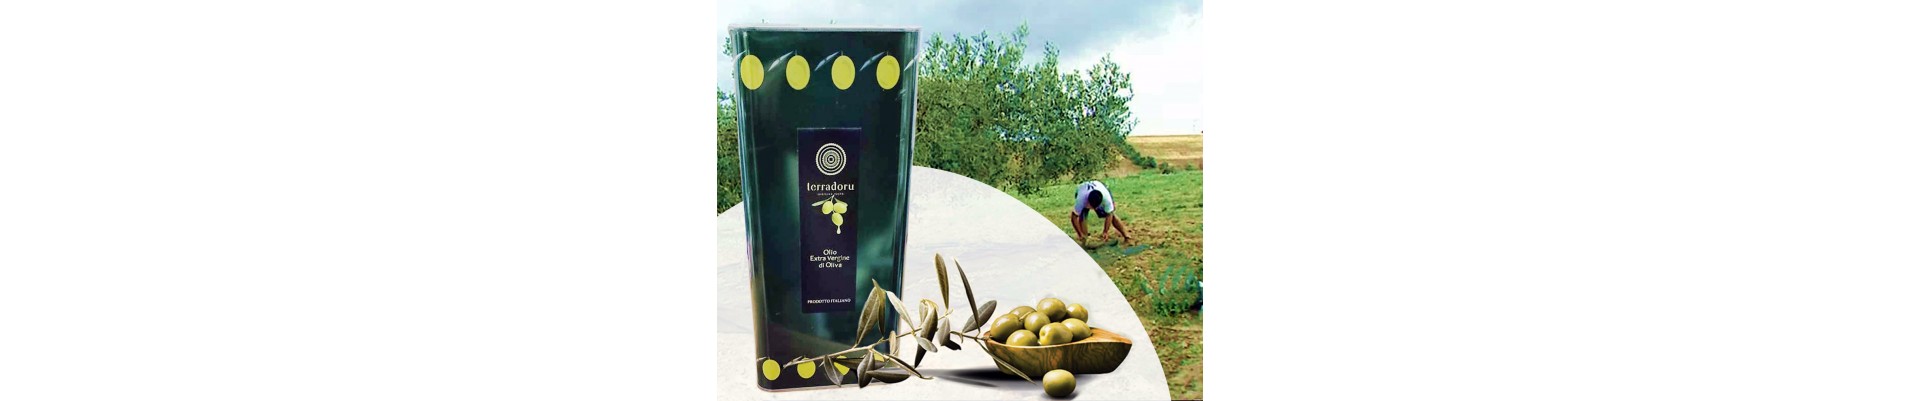 Vente en ligne d'huile d'olive extra vierge sicilienne